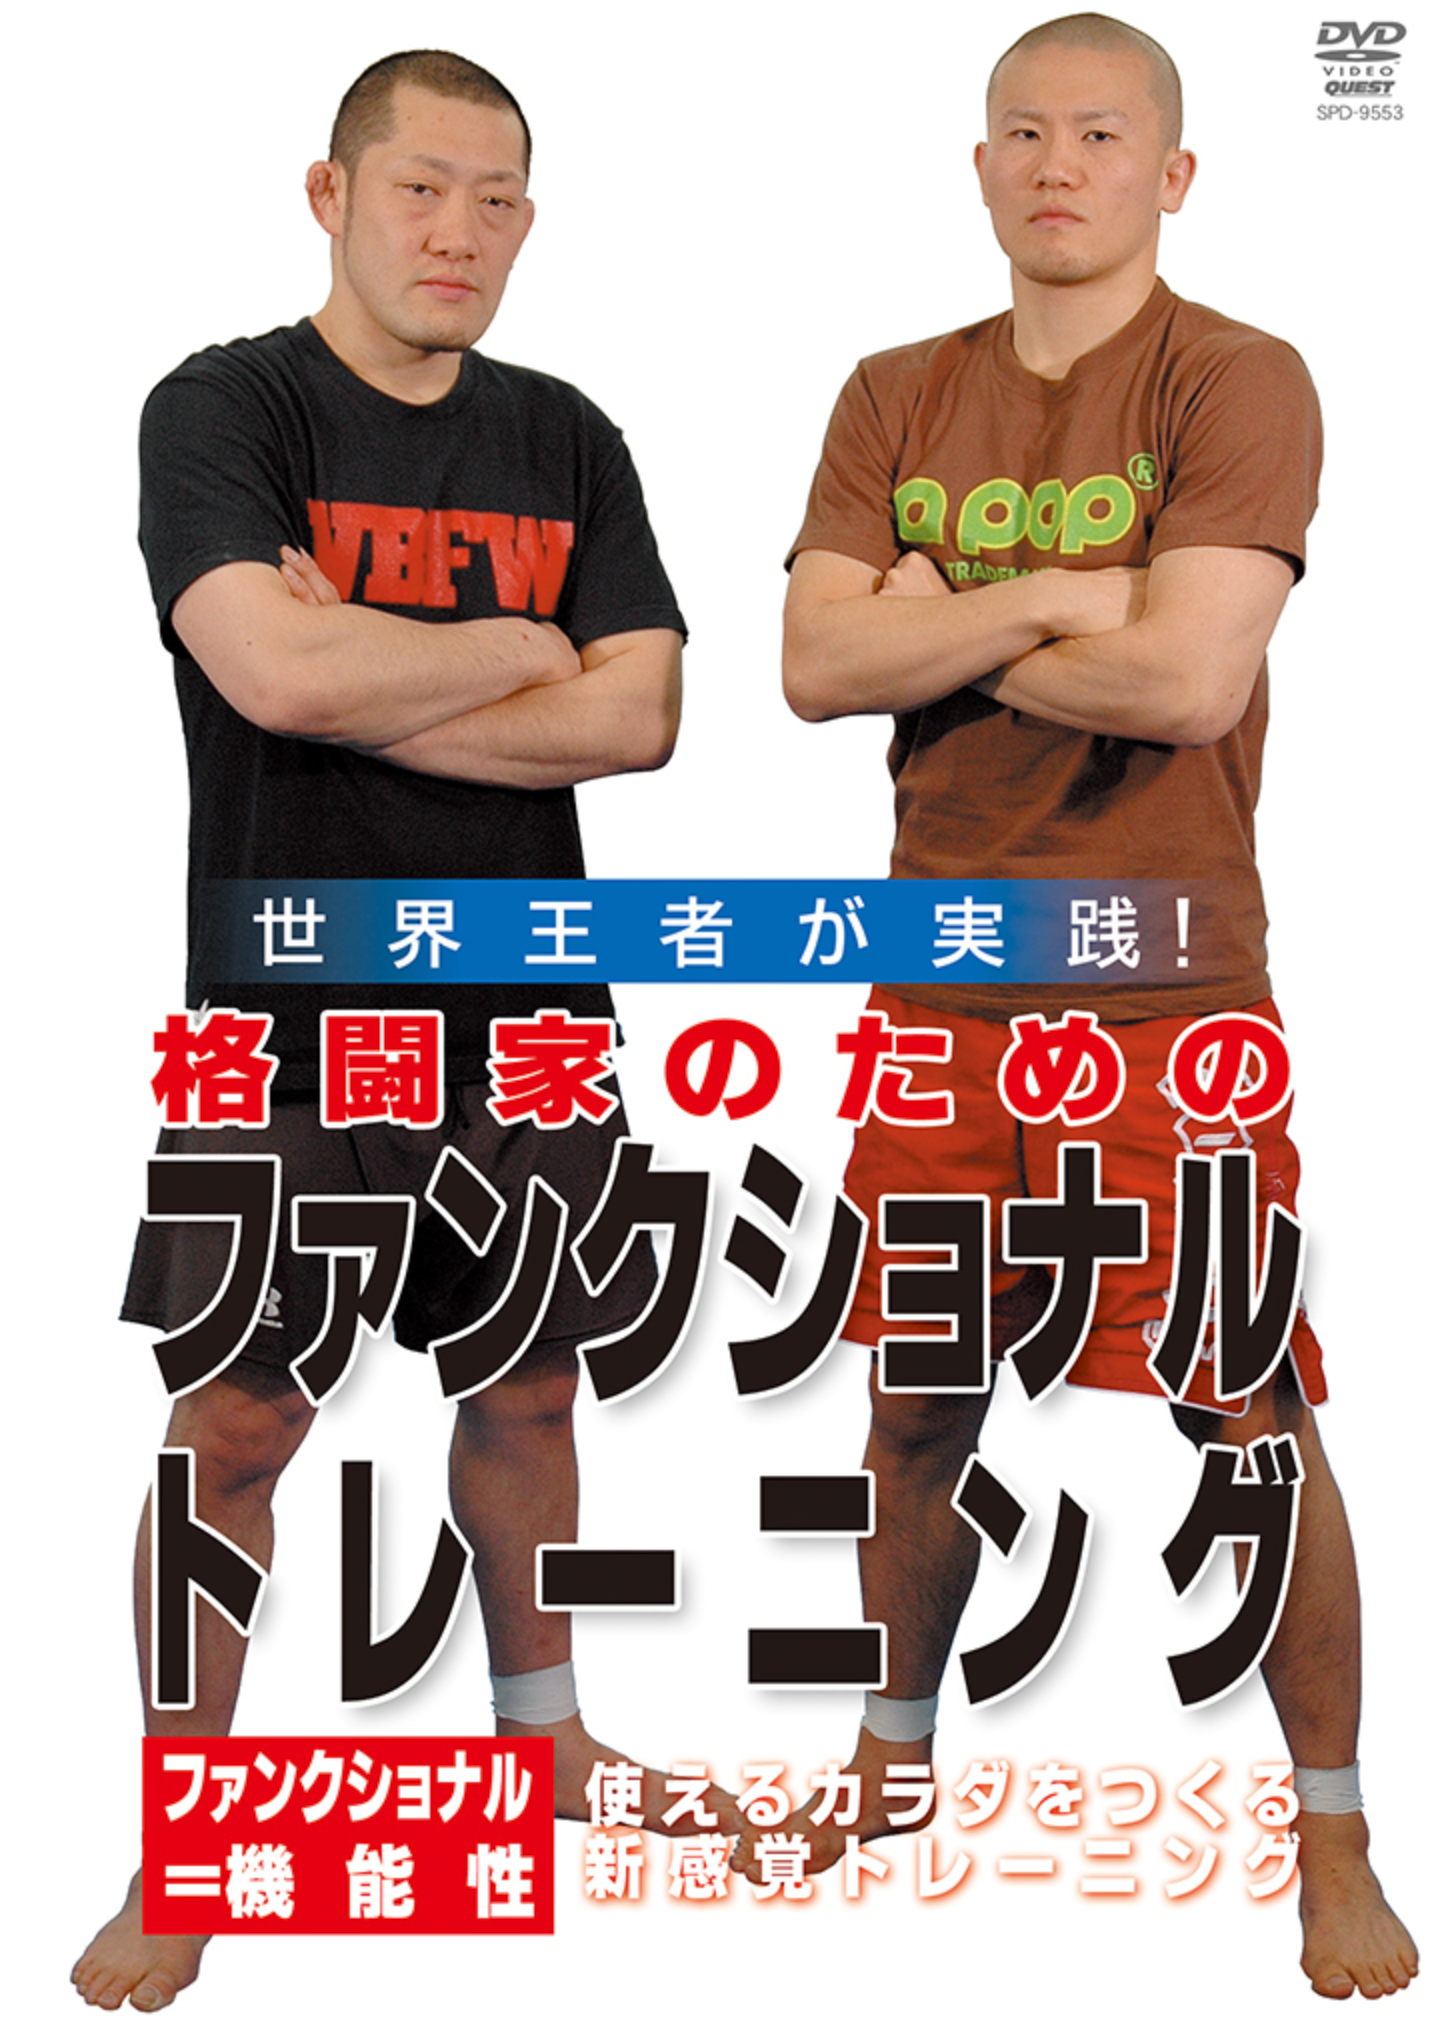 Functional Training for Fighters DVD by Takashi Nakakura & Koetsu Okazaki - Budovideos Inc